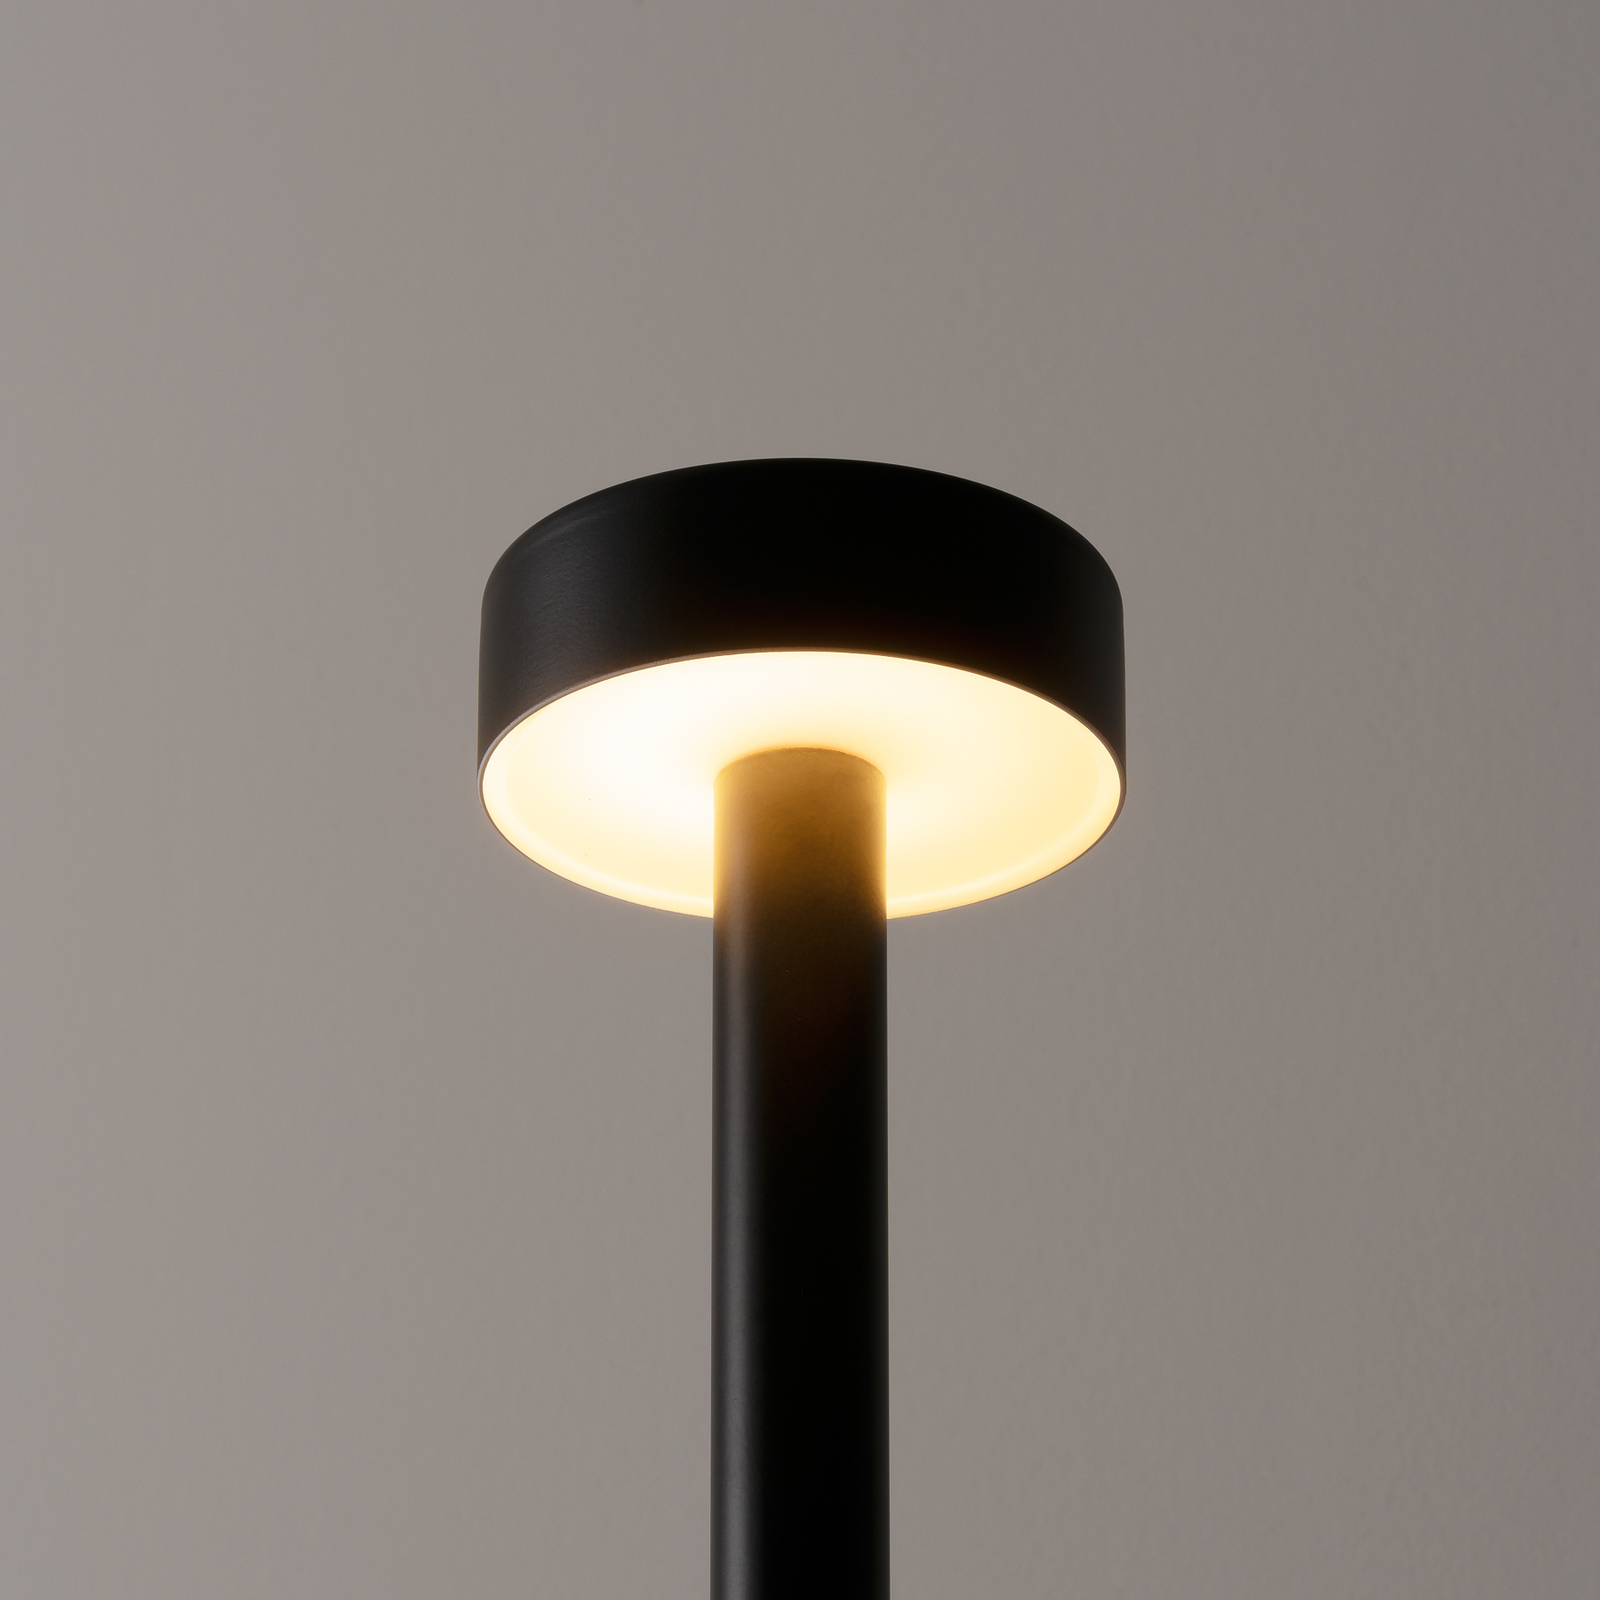 Milan Peak Lane lampada LED da tavolo, di design